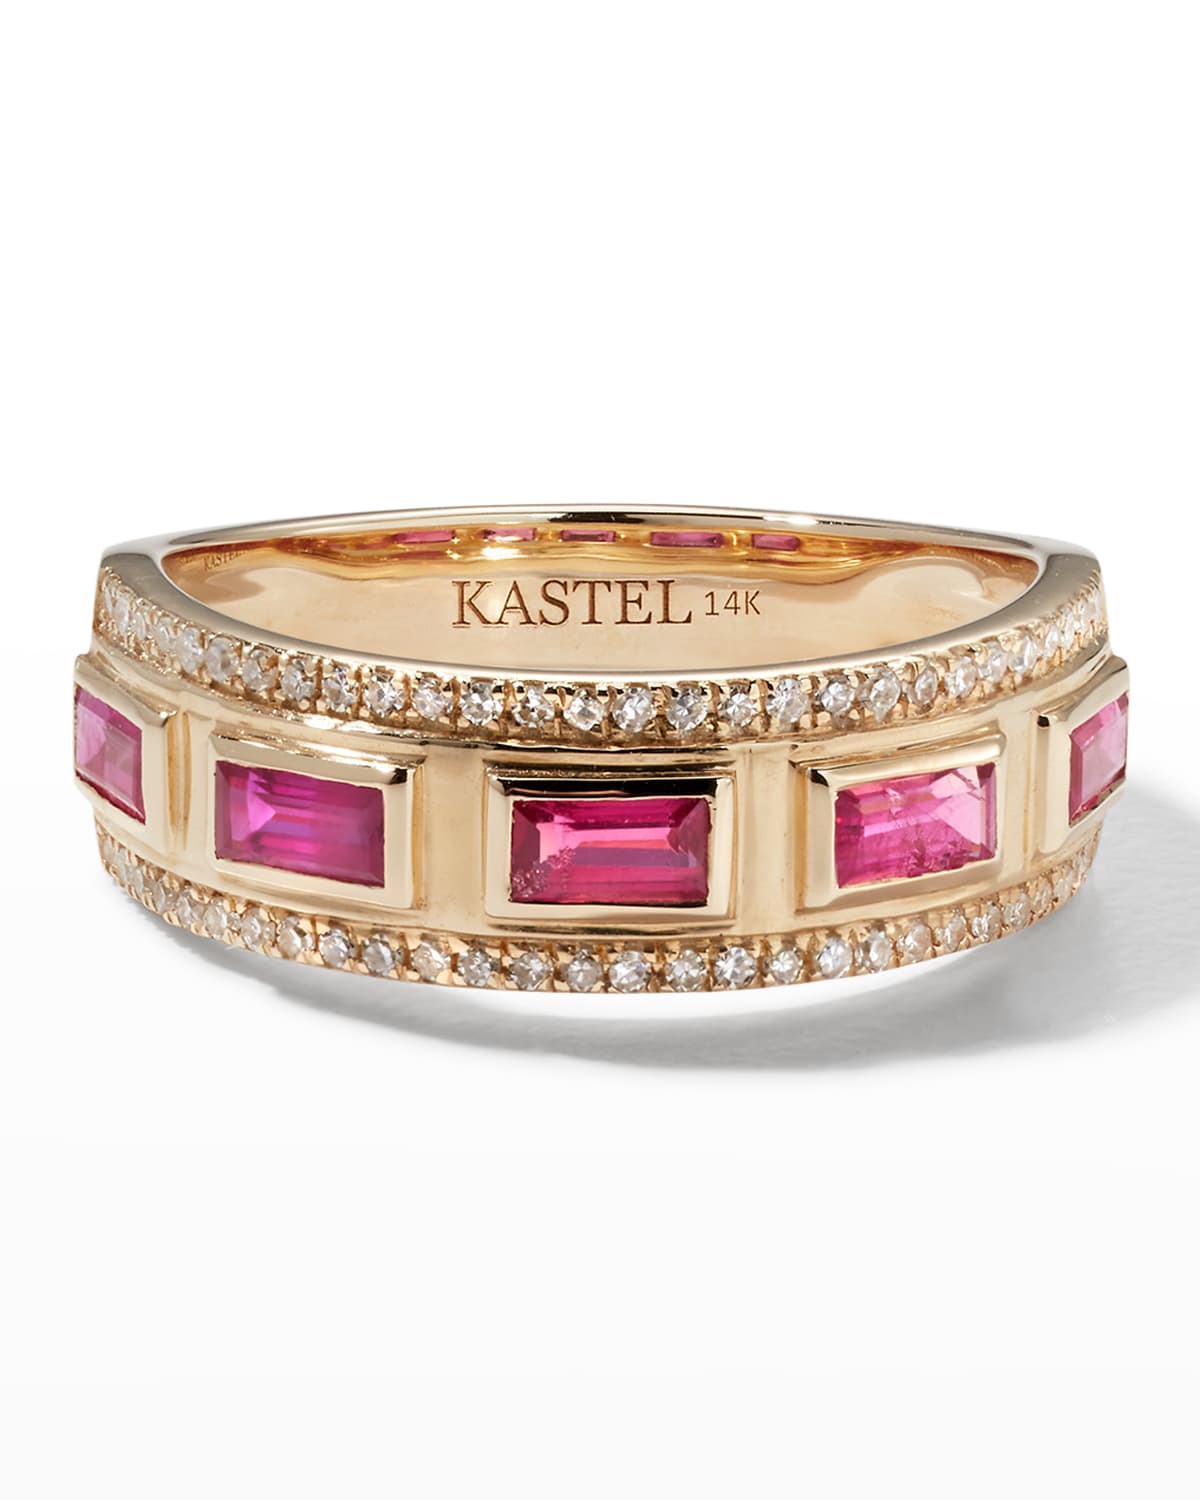 Kastel Jewelry 14k Ruby and Diamond Ring, Size 7